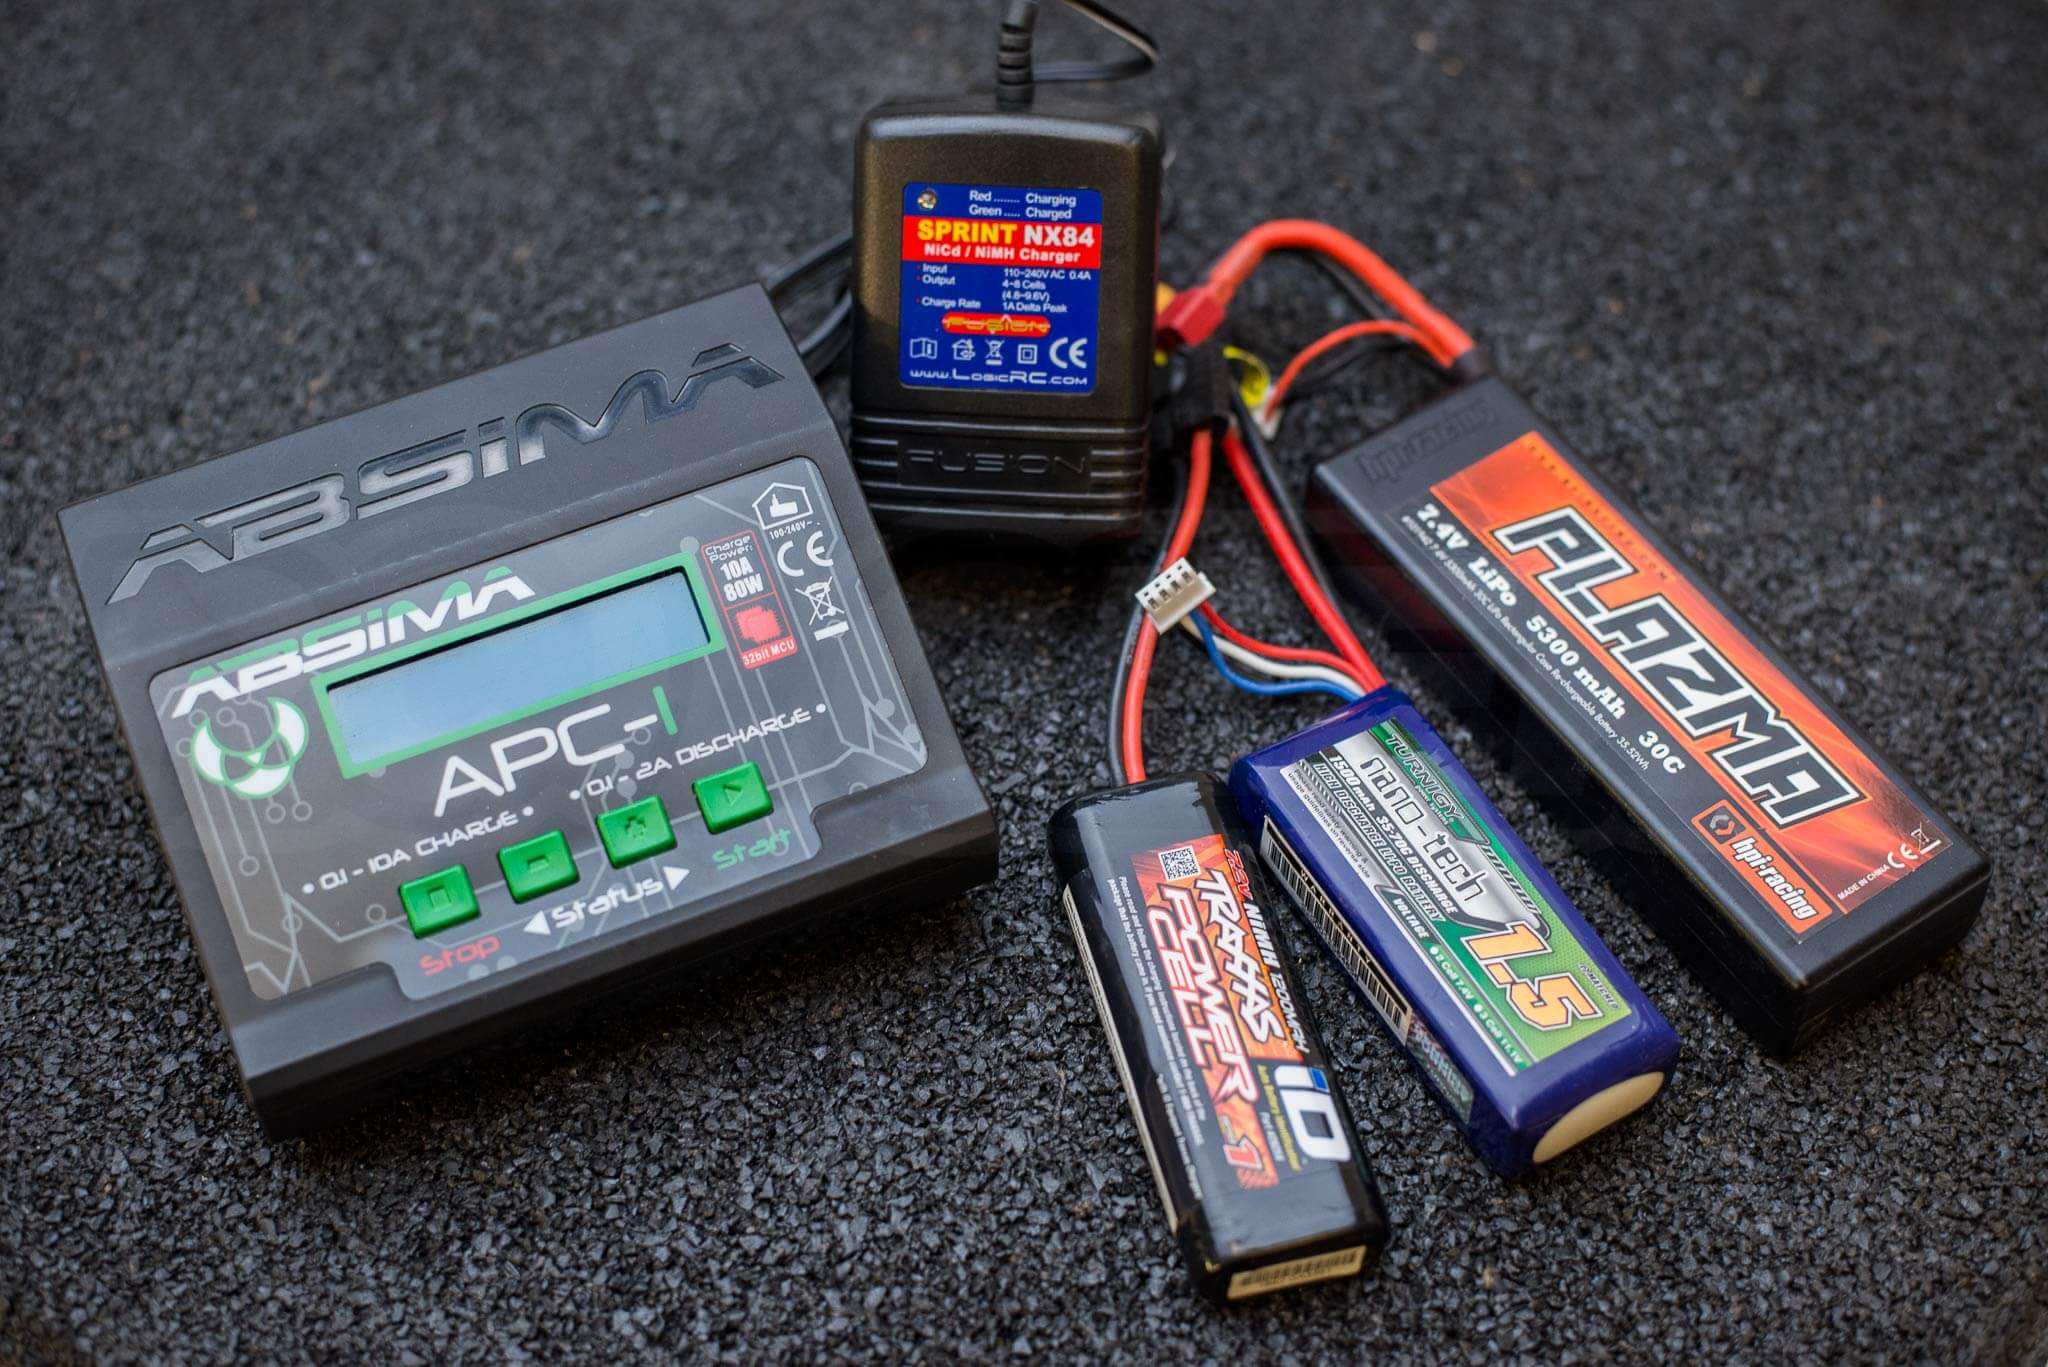 A Remote Control Car Battery Guide